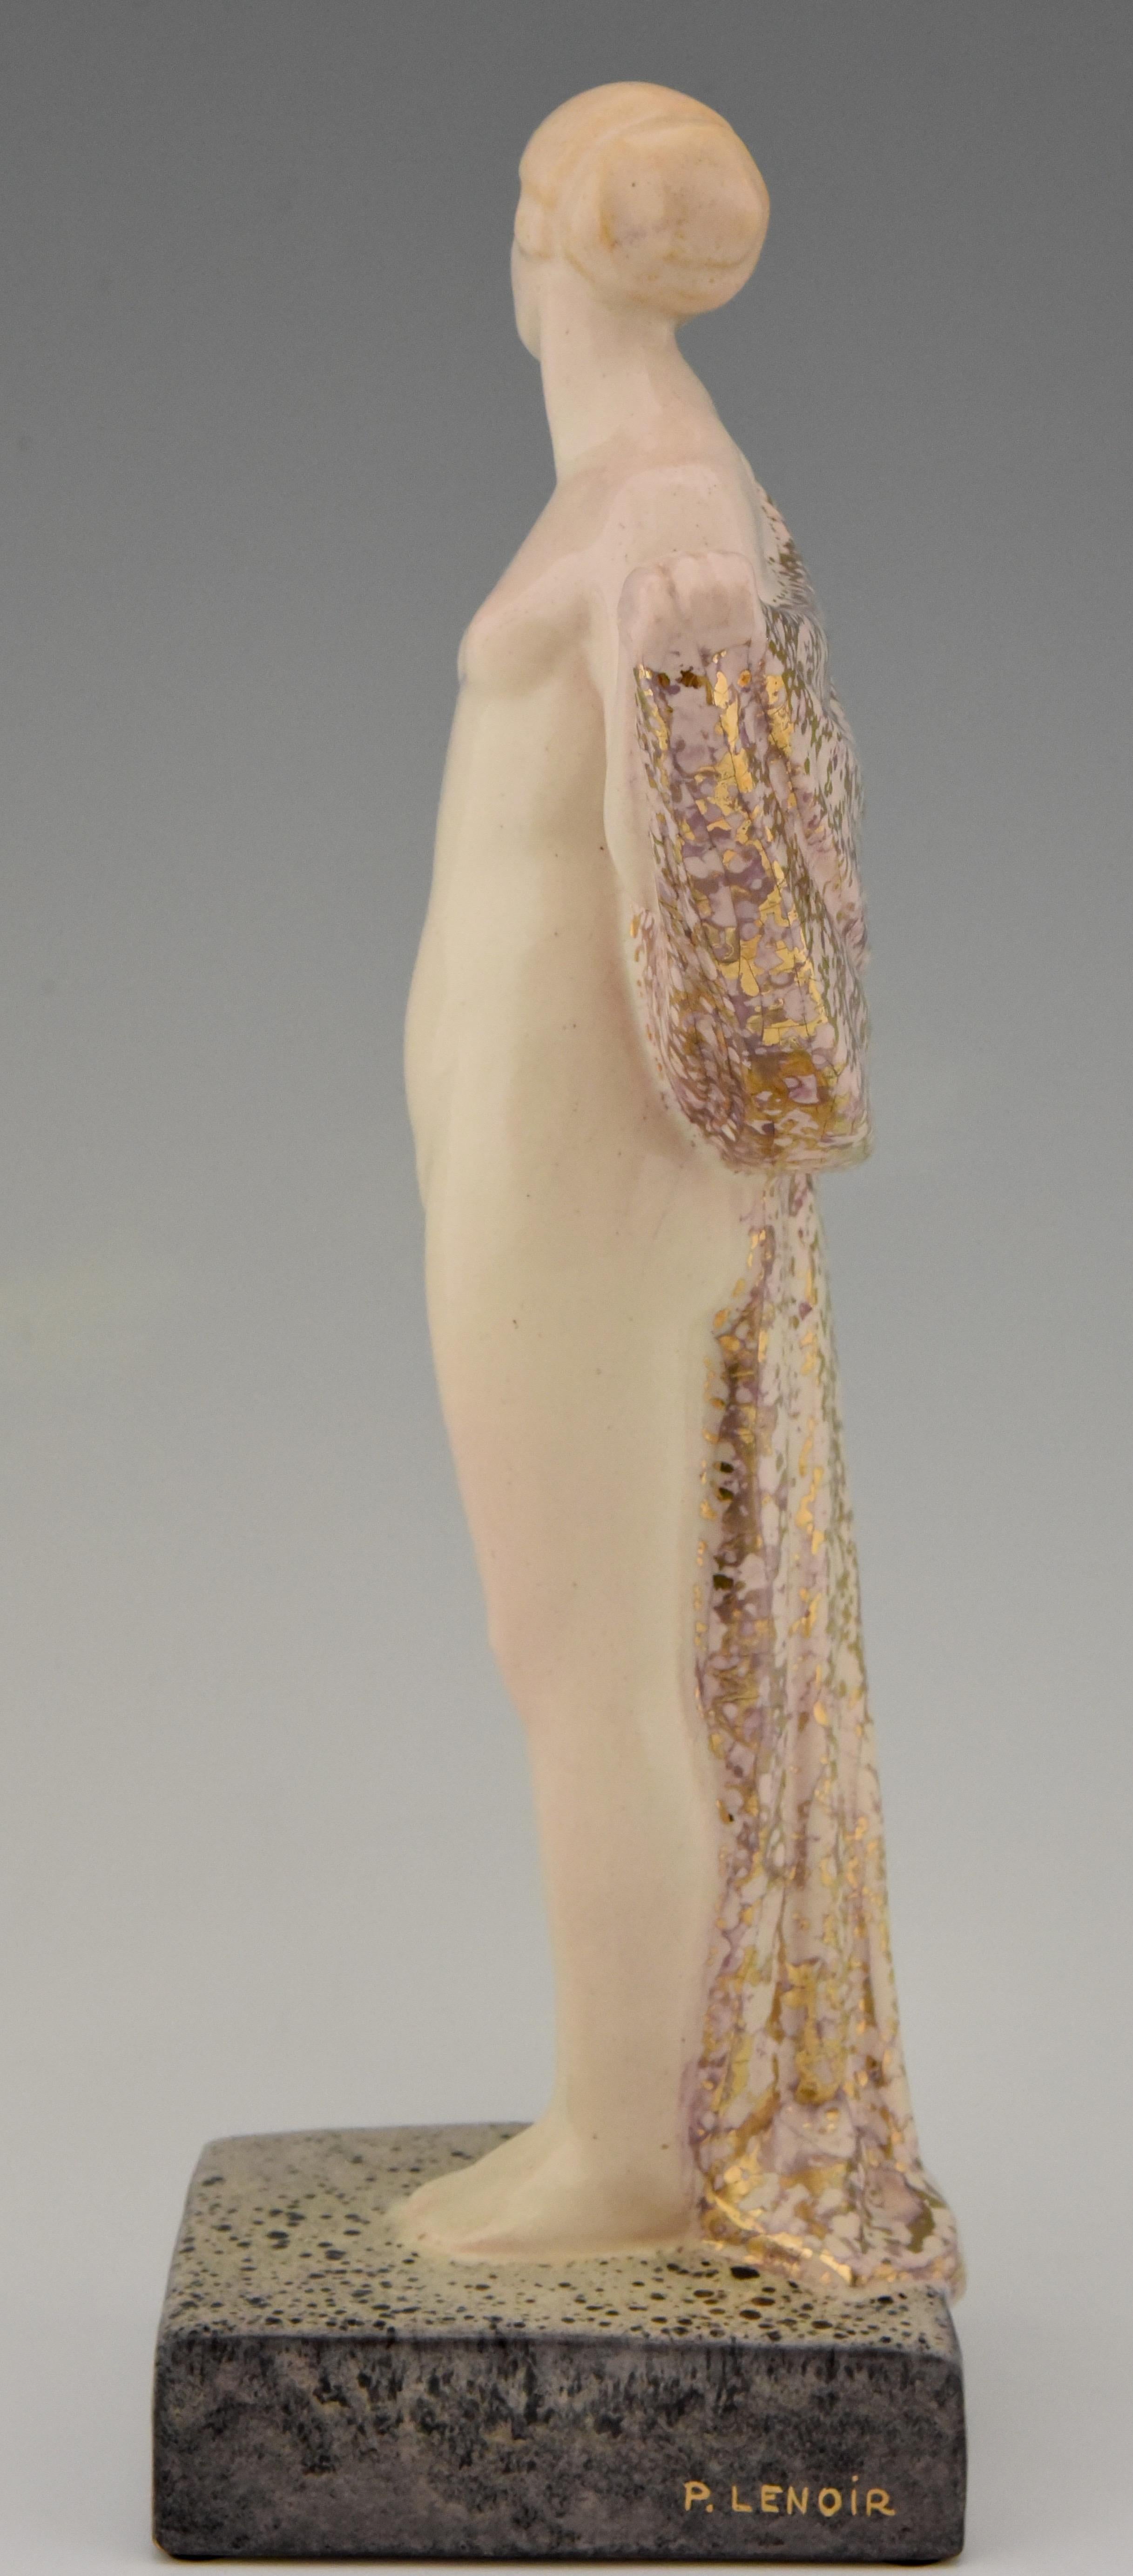 20th Century Art Deco Ceramic Sculpture Draped Nude Pierre Lenoir, France, 1925